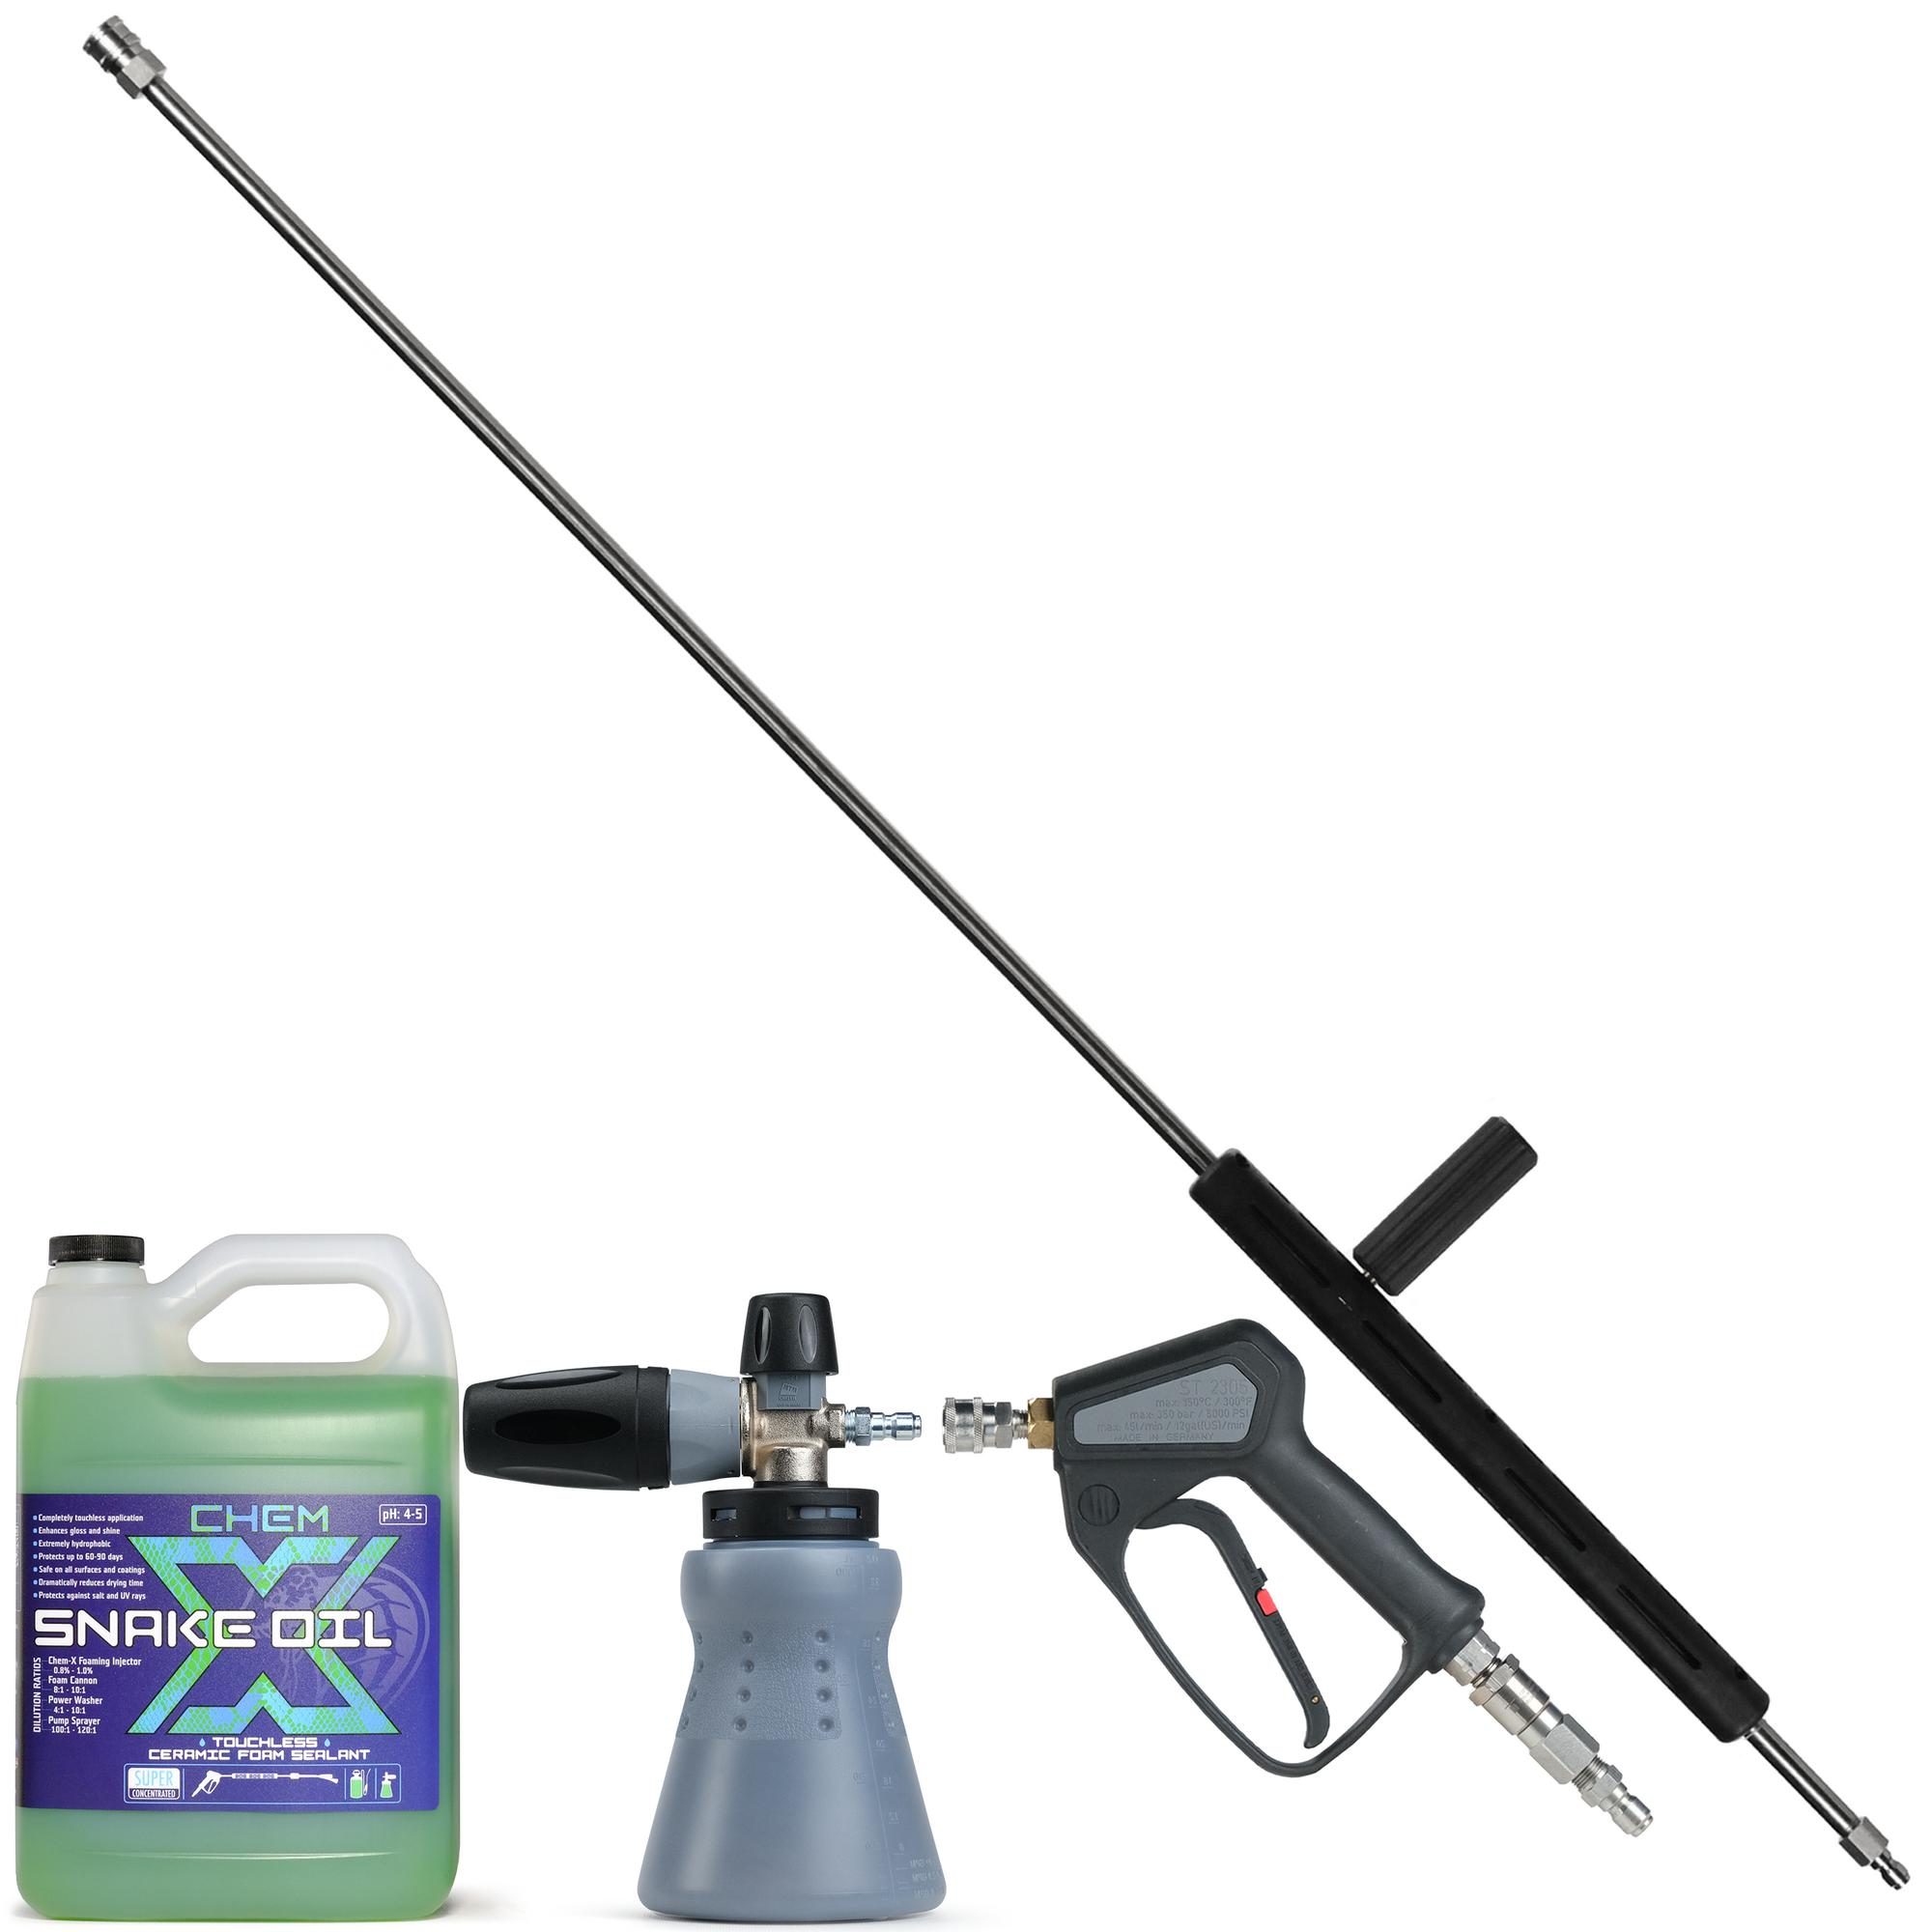 The Xtreme Foam Kit XL: Single cannon + ST-2305 & Swivel + Lance - Chem-X